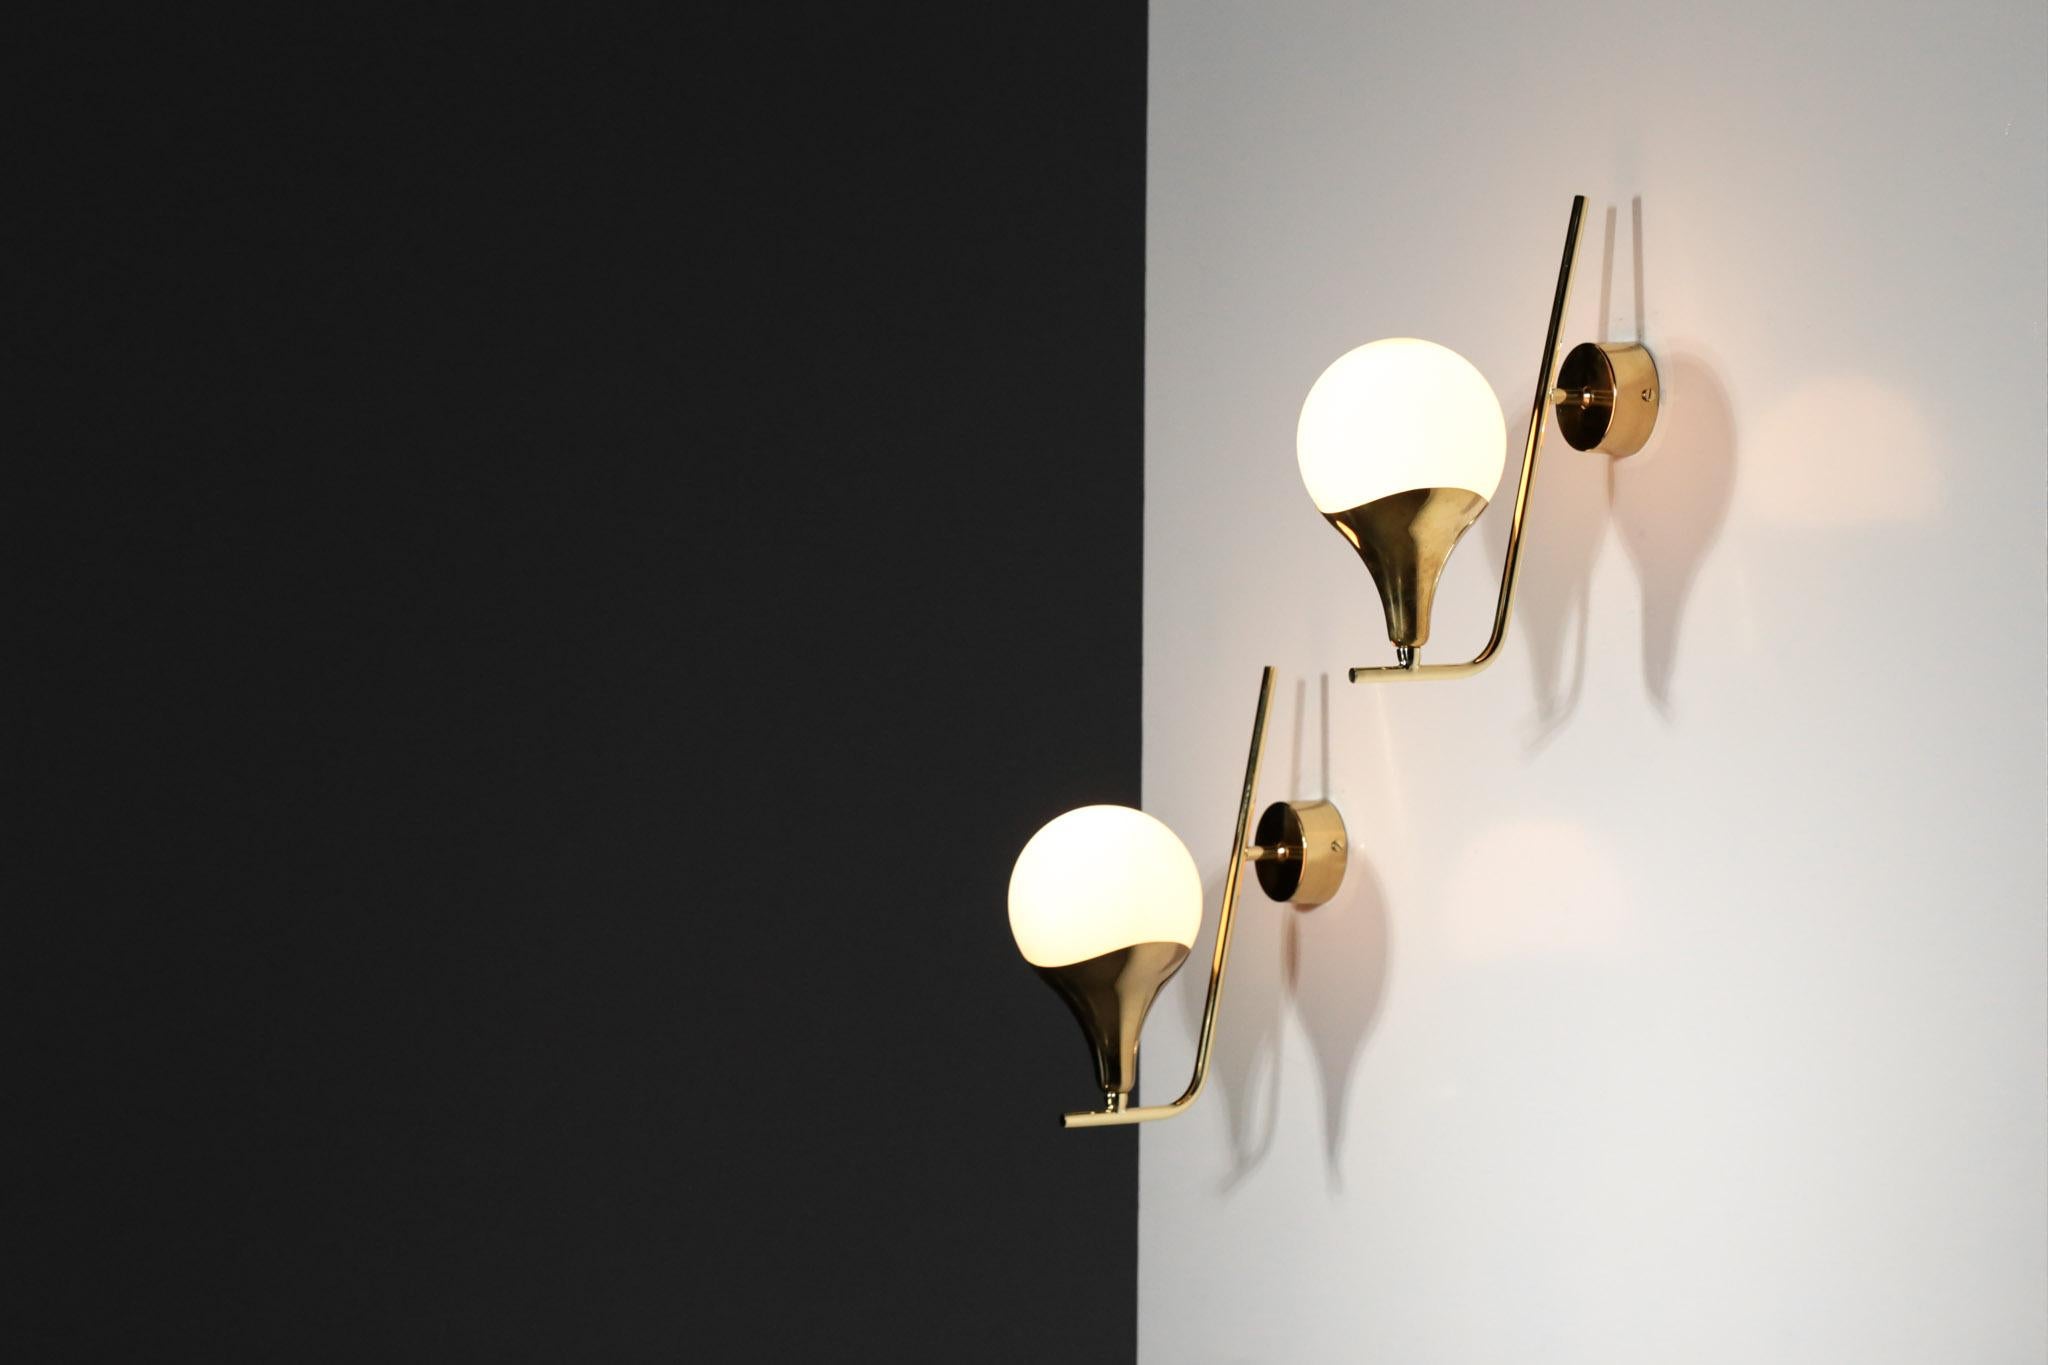 European Pair of Modern Wall Light in the Style of Gino Sarfatti, Italian Design For Sale